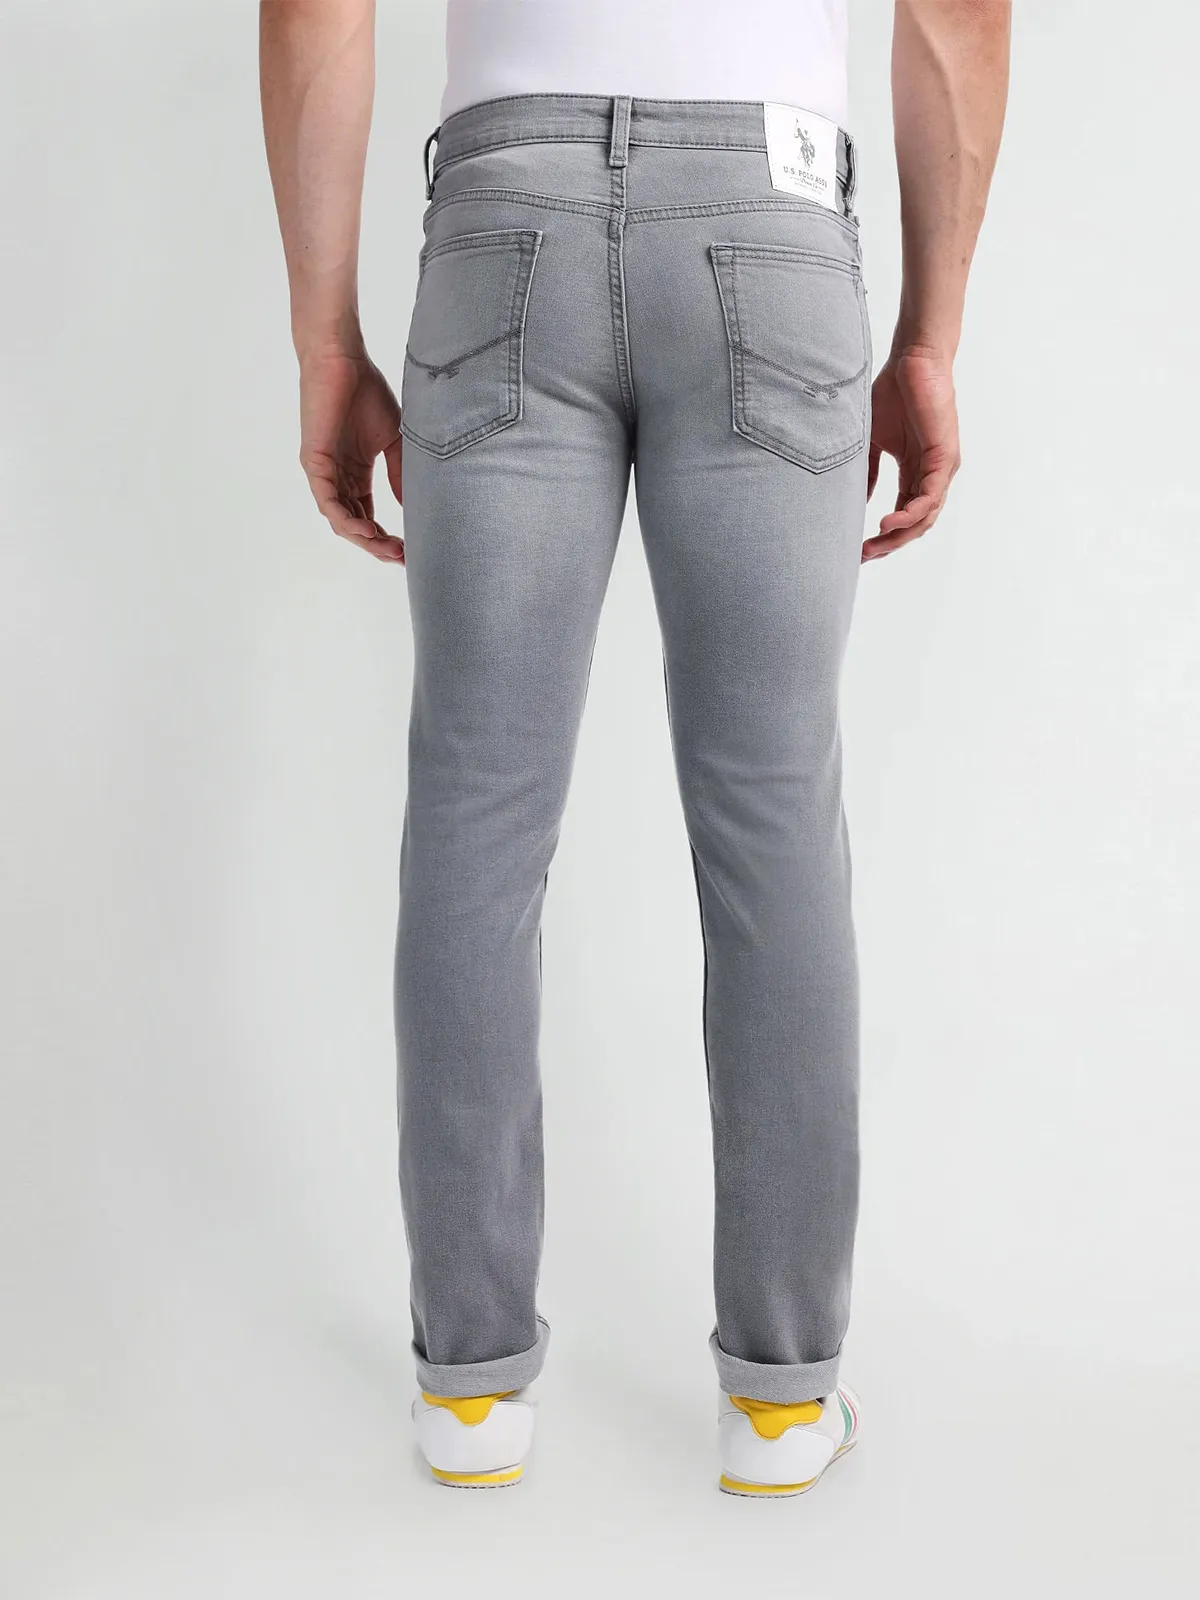 U S POLO ASSN grey regallo skinny fit jeans